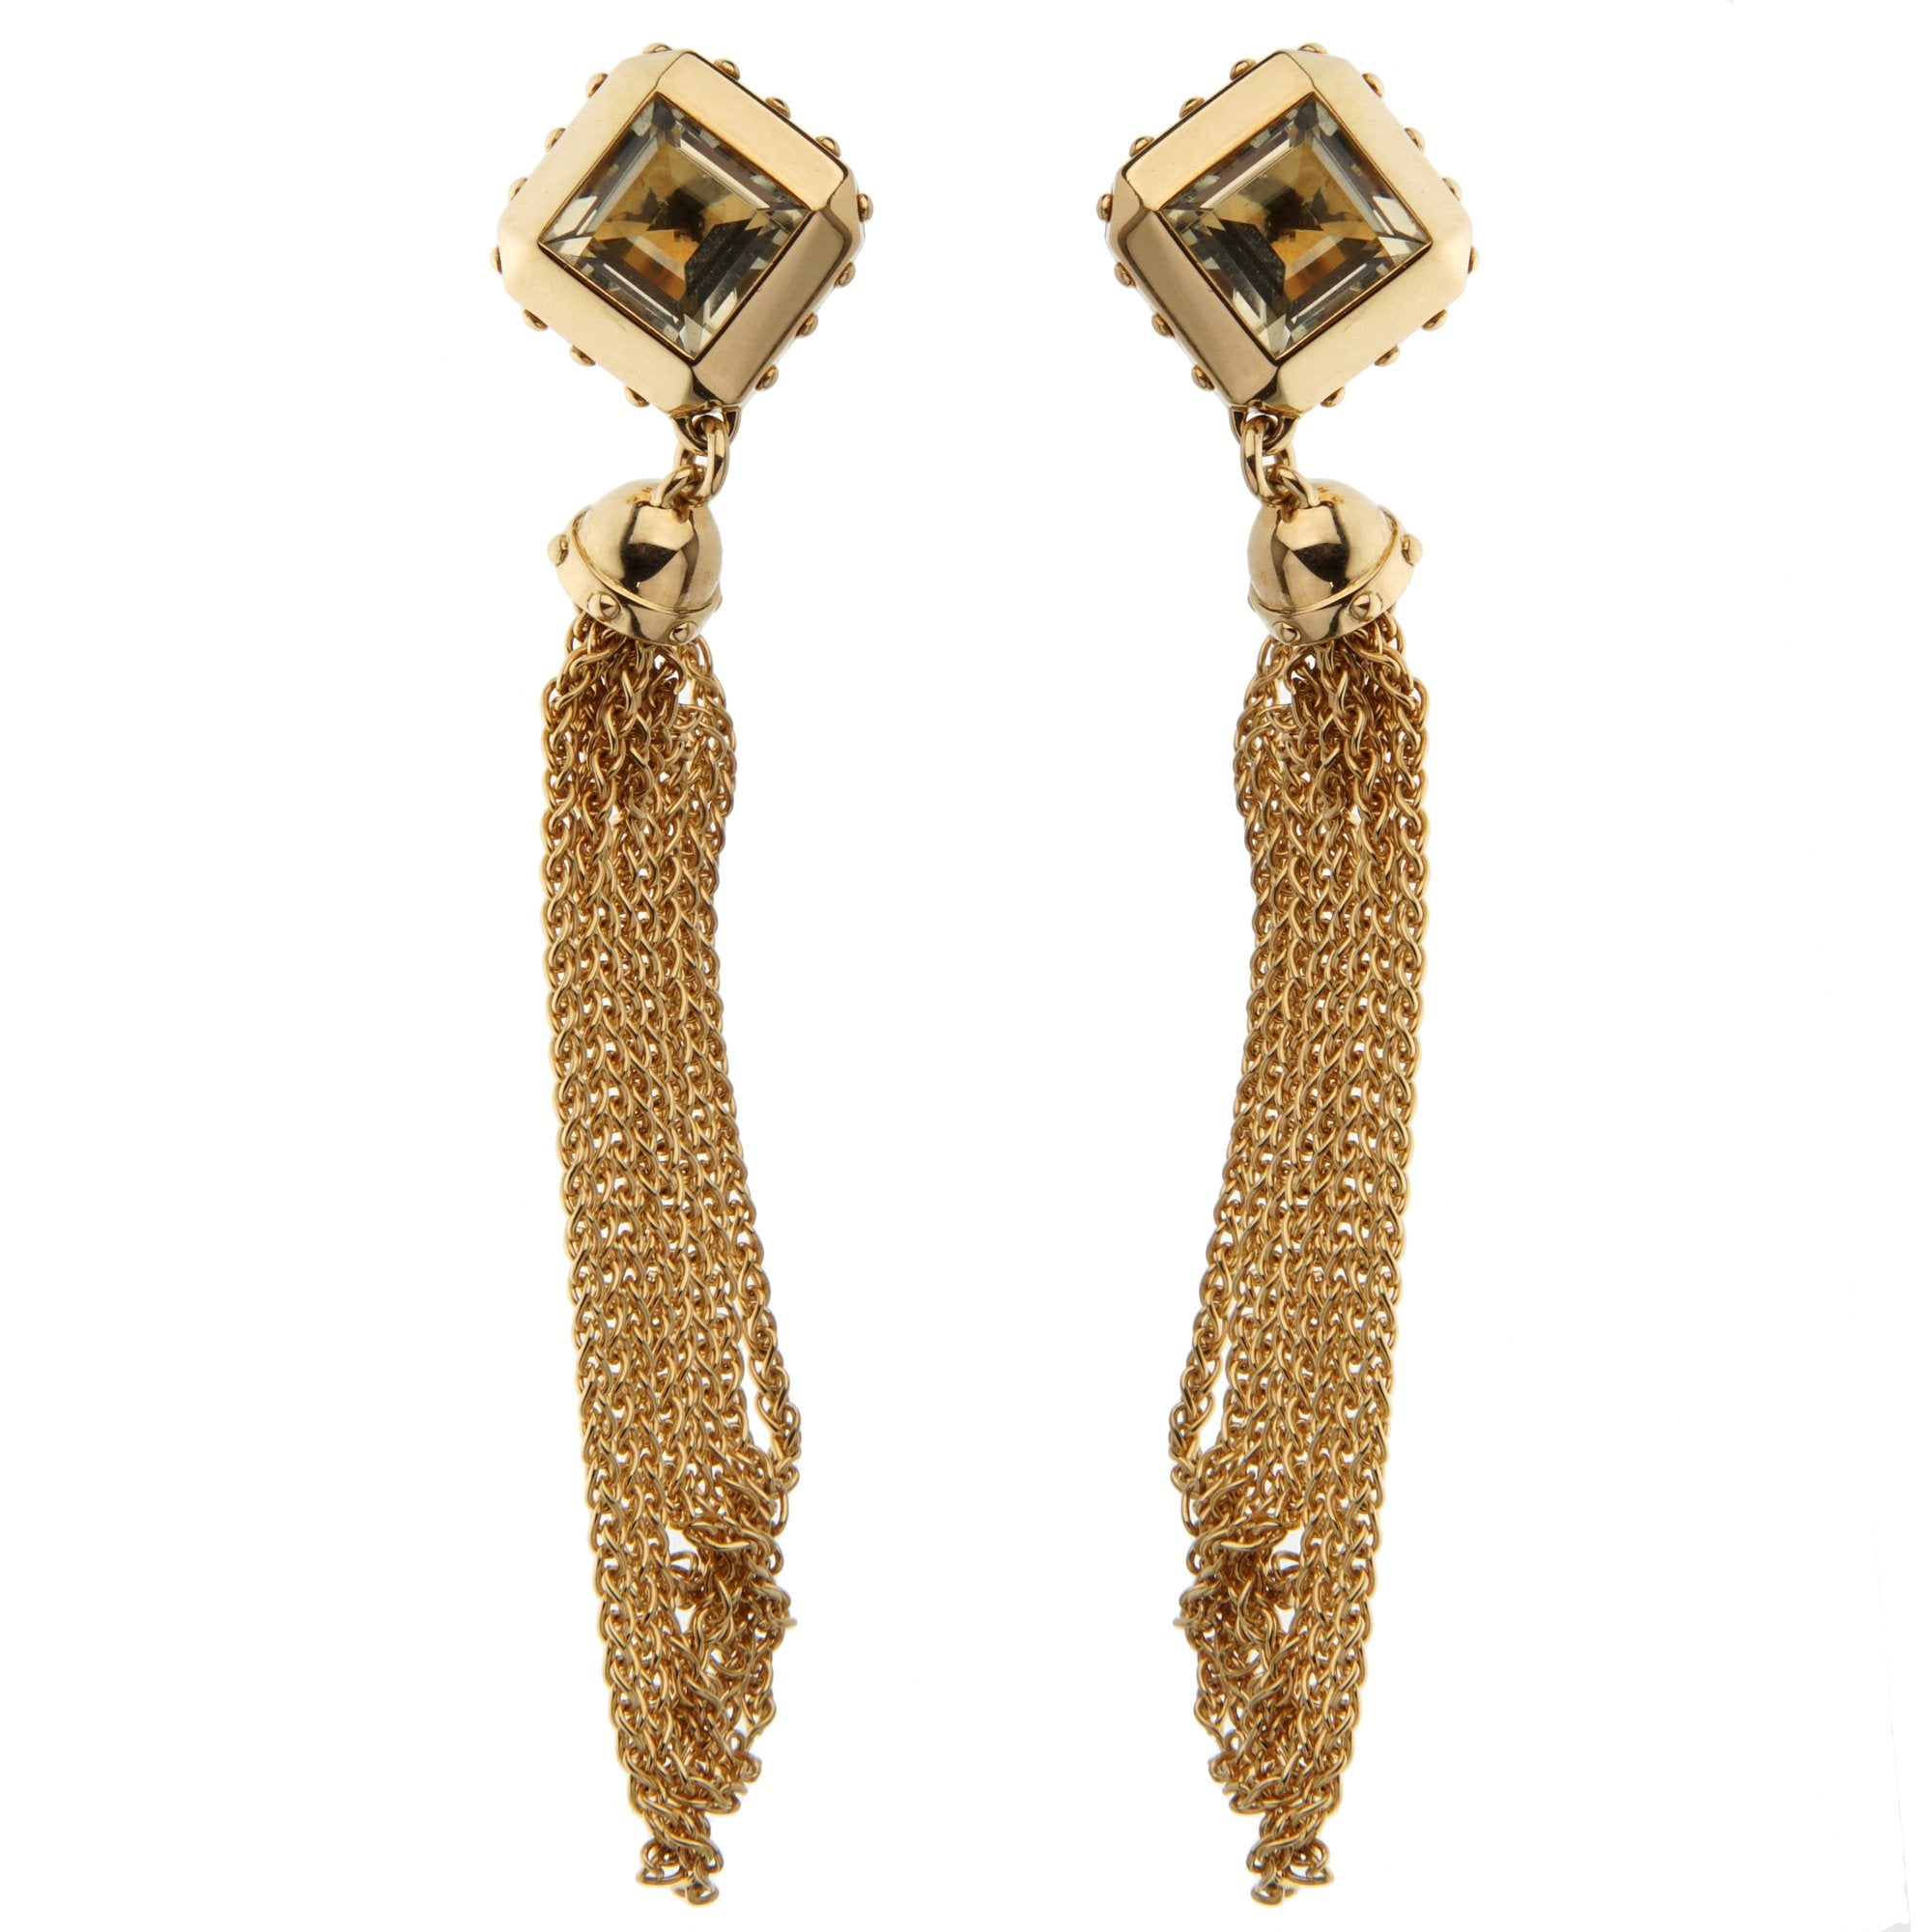 vuitton earrings gold